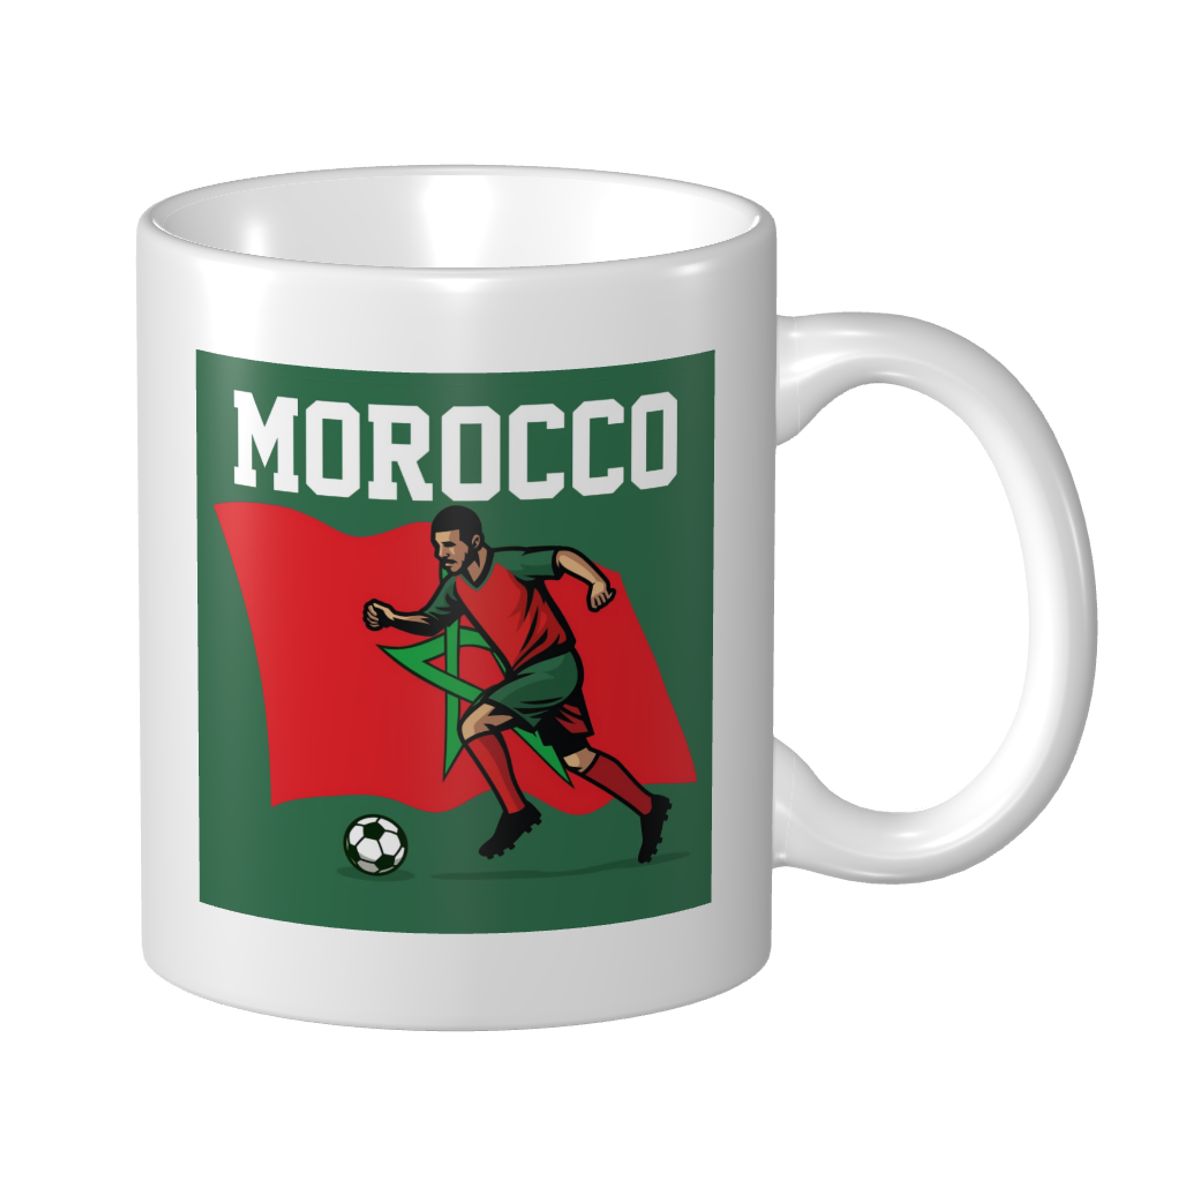 Morocco Soccer Player Ceramic Mug